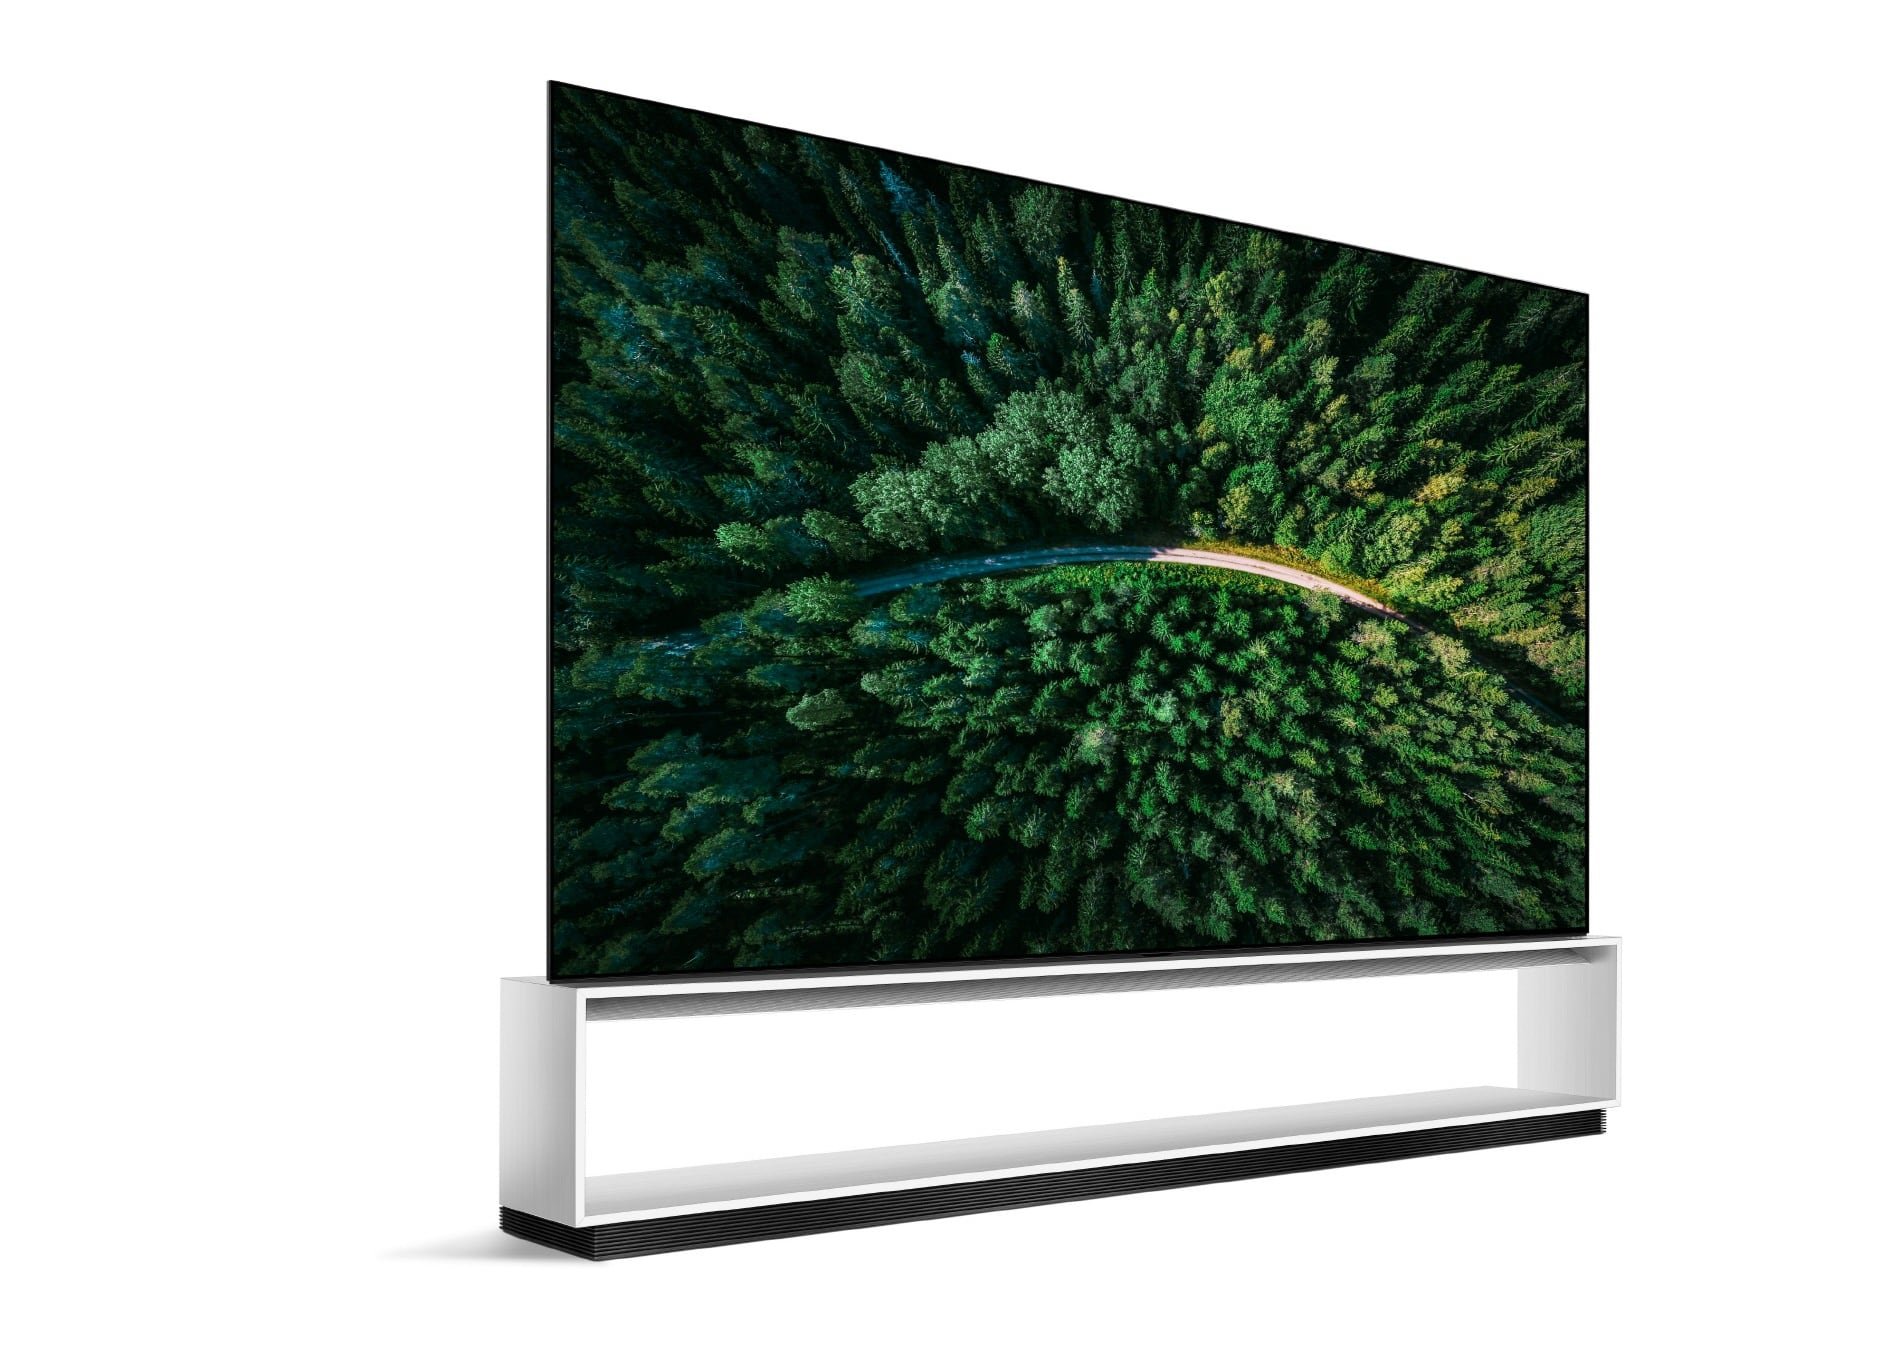 Smart TV OLED LG Z9